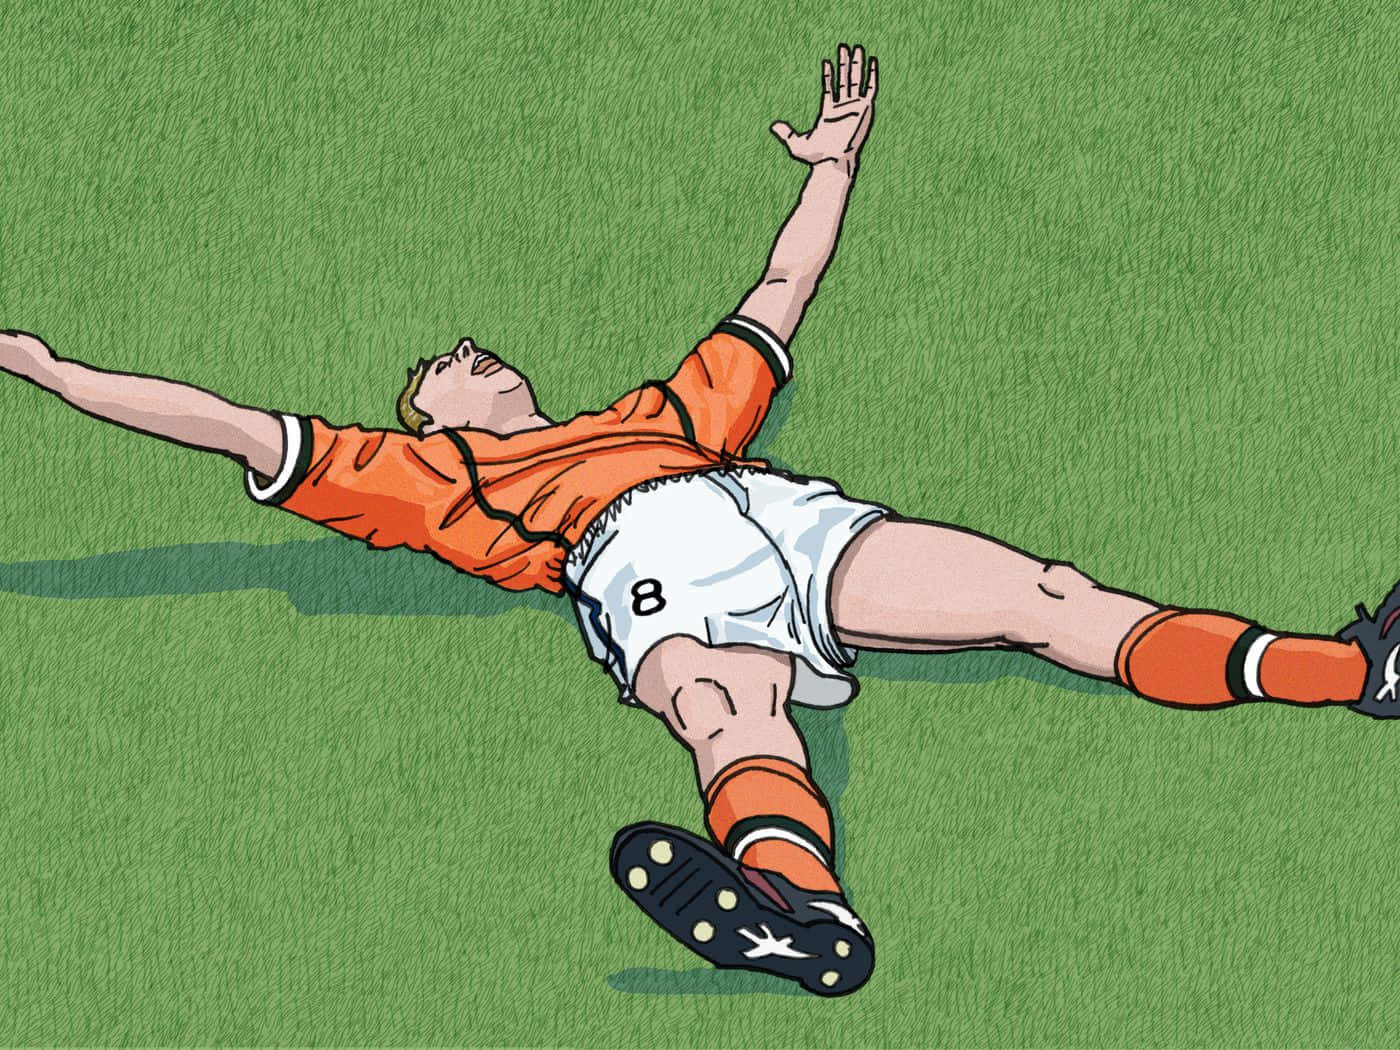 Dennis Bergkamp Lying On The Field Digital Art Illustration Wallpaper